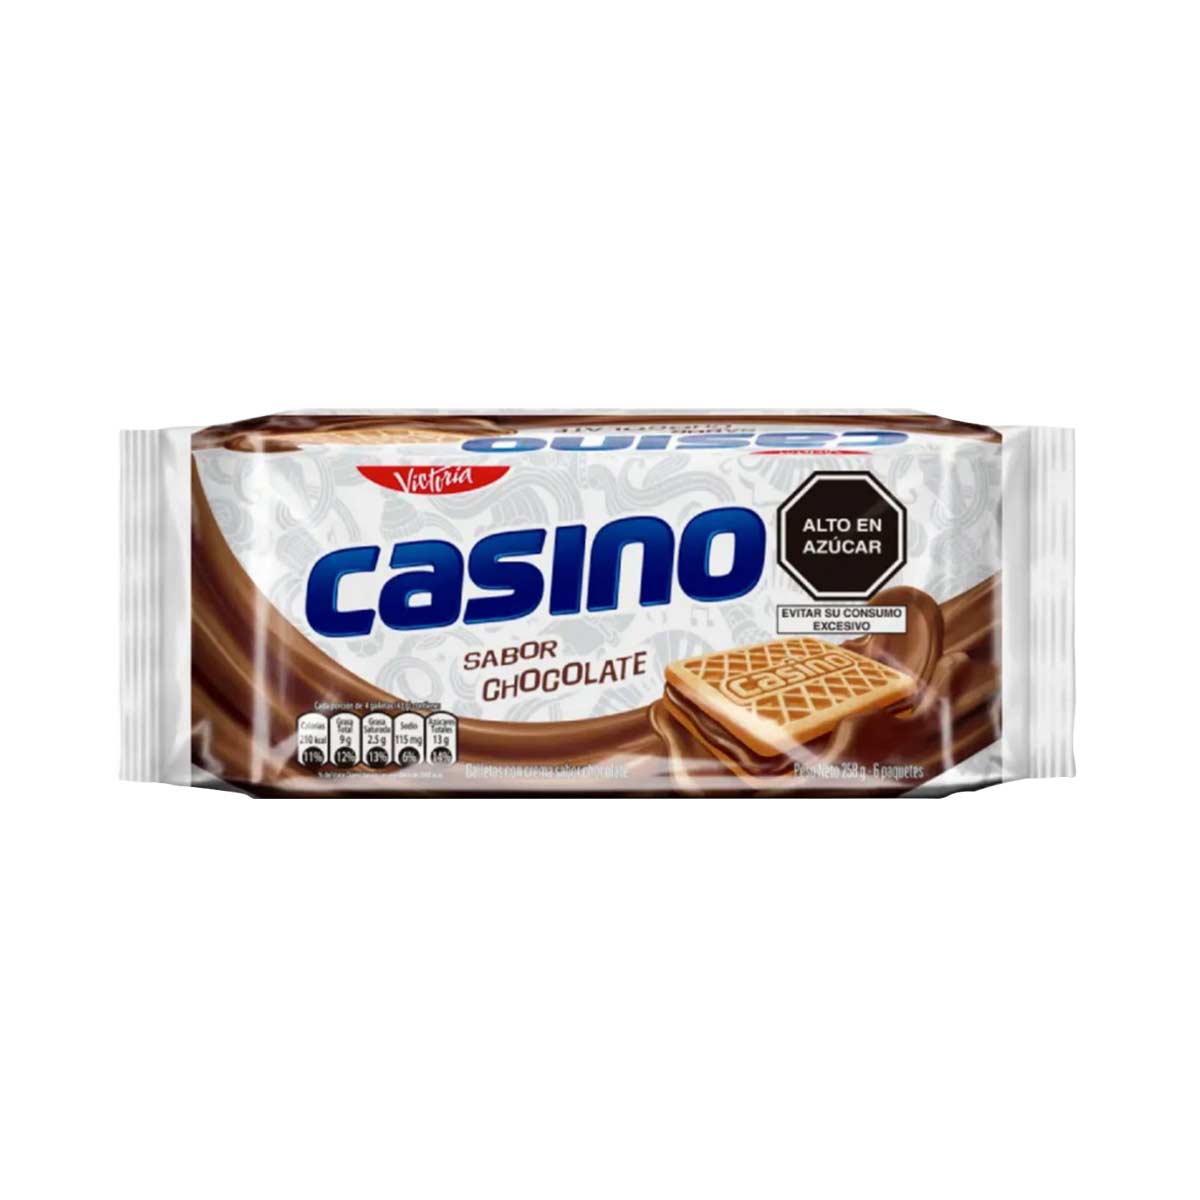 casinochocolate6paquetes